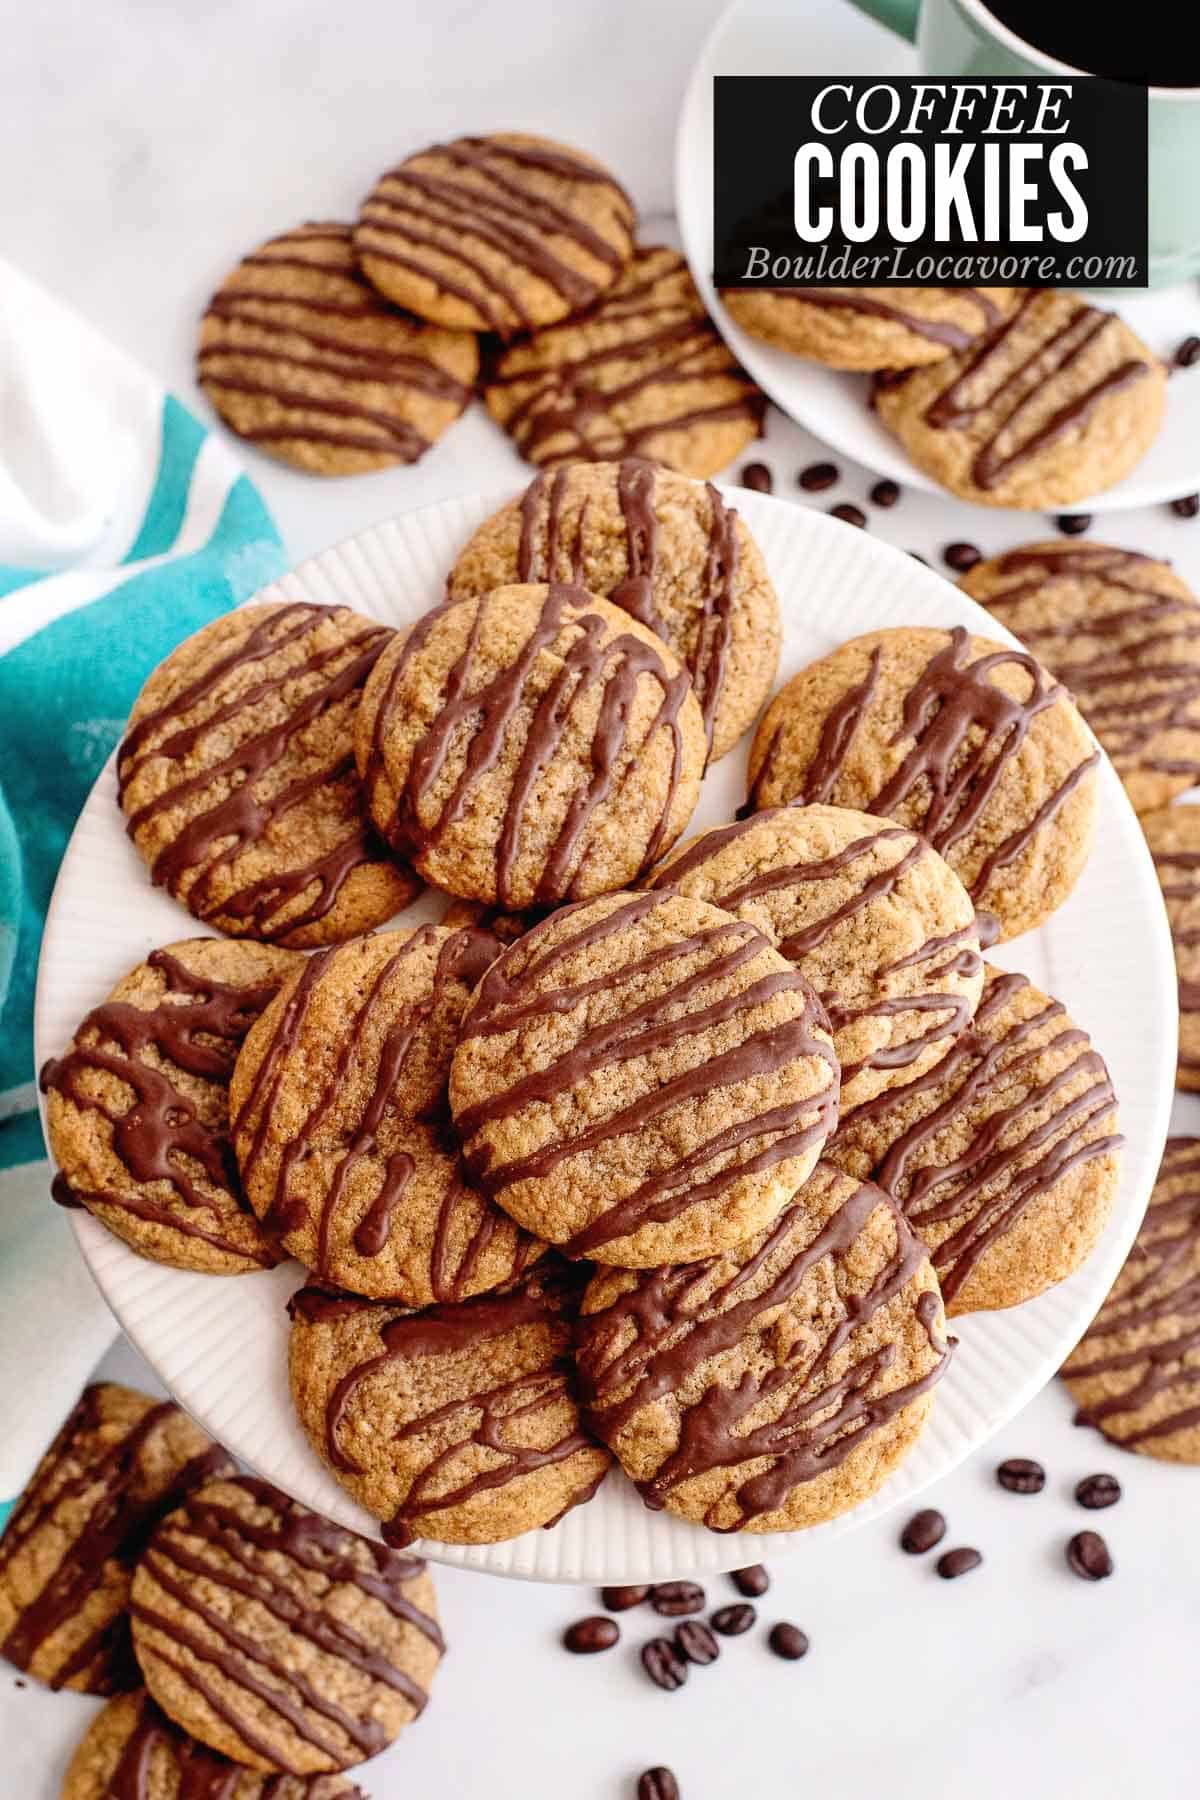 coffee cookies with chocolate glaze overhead.